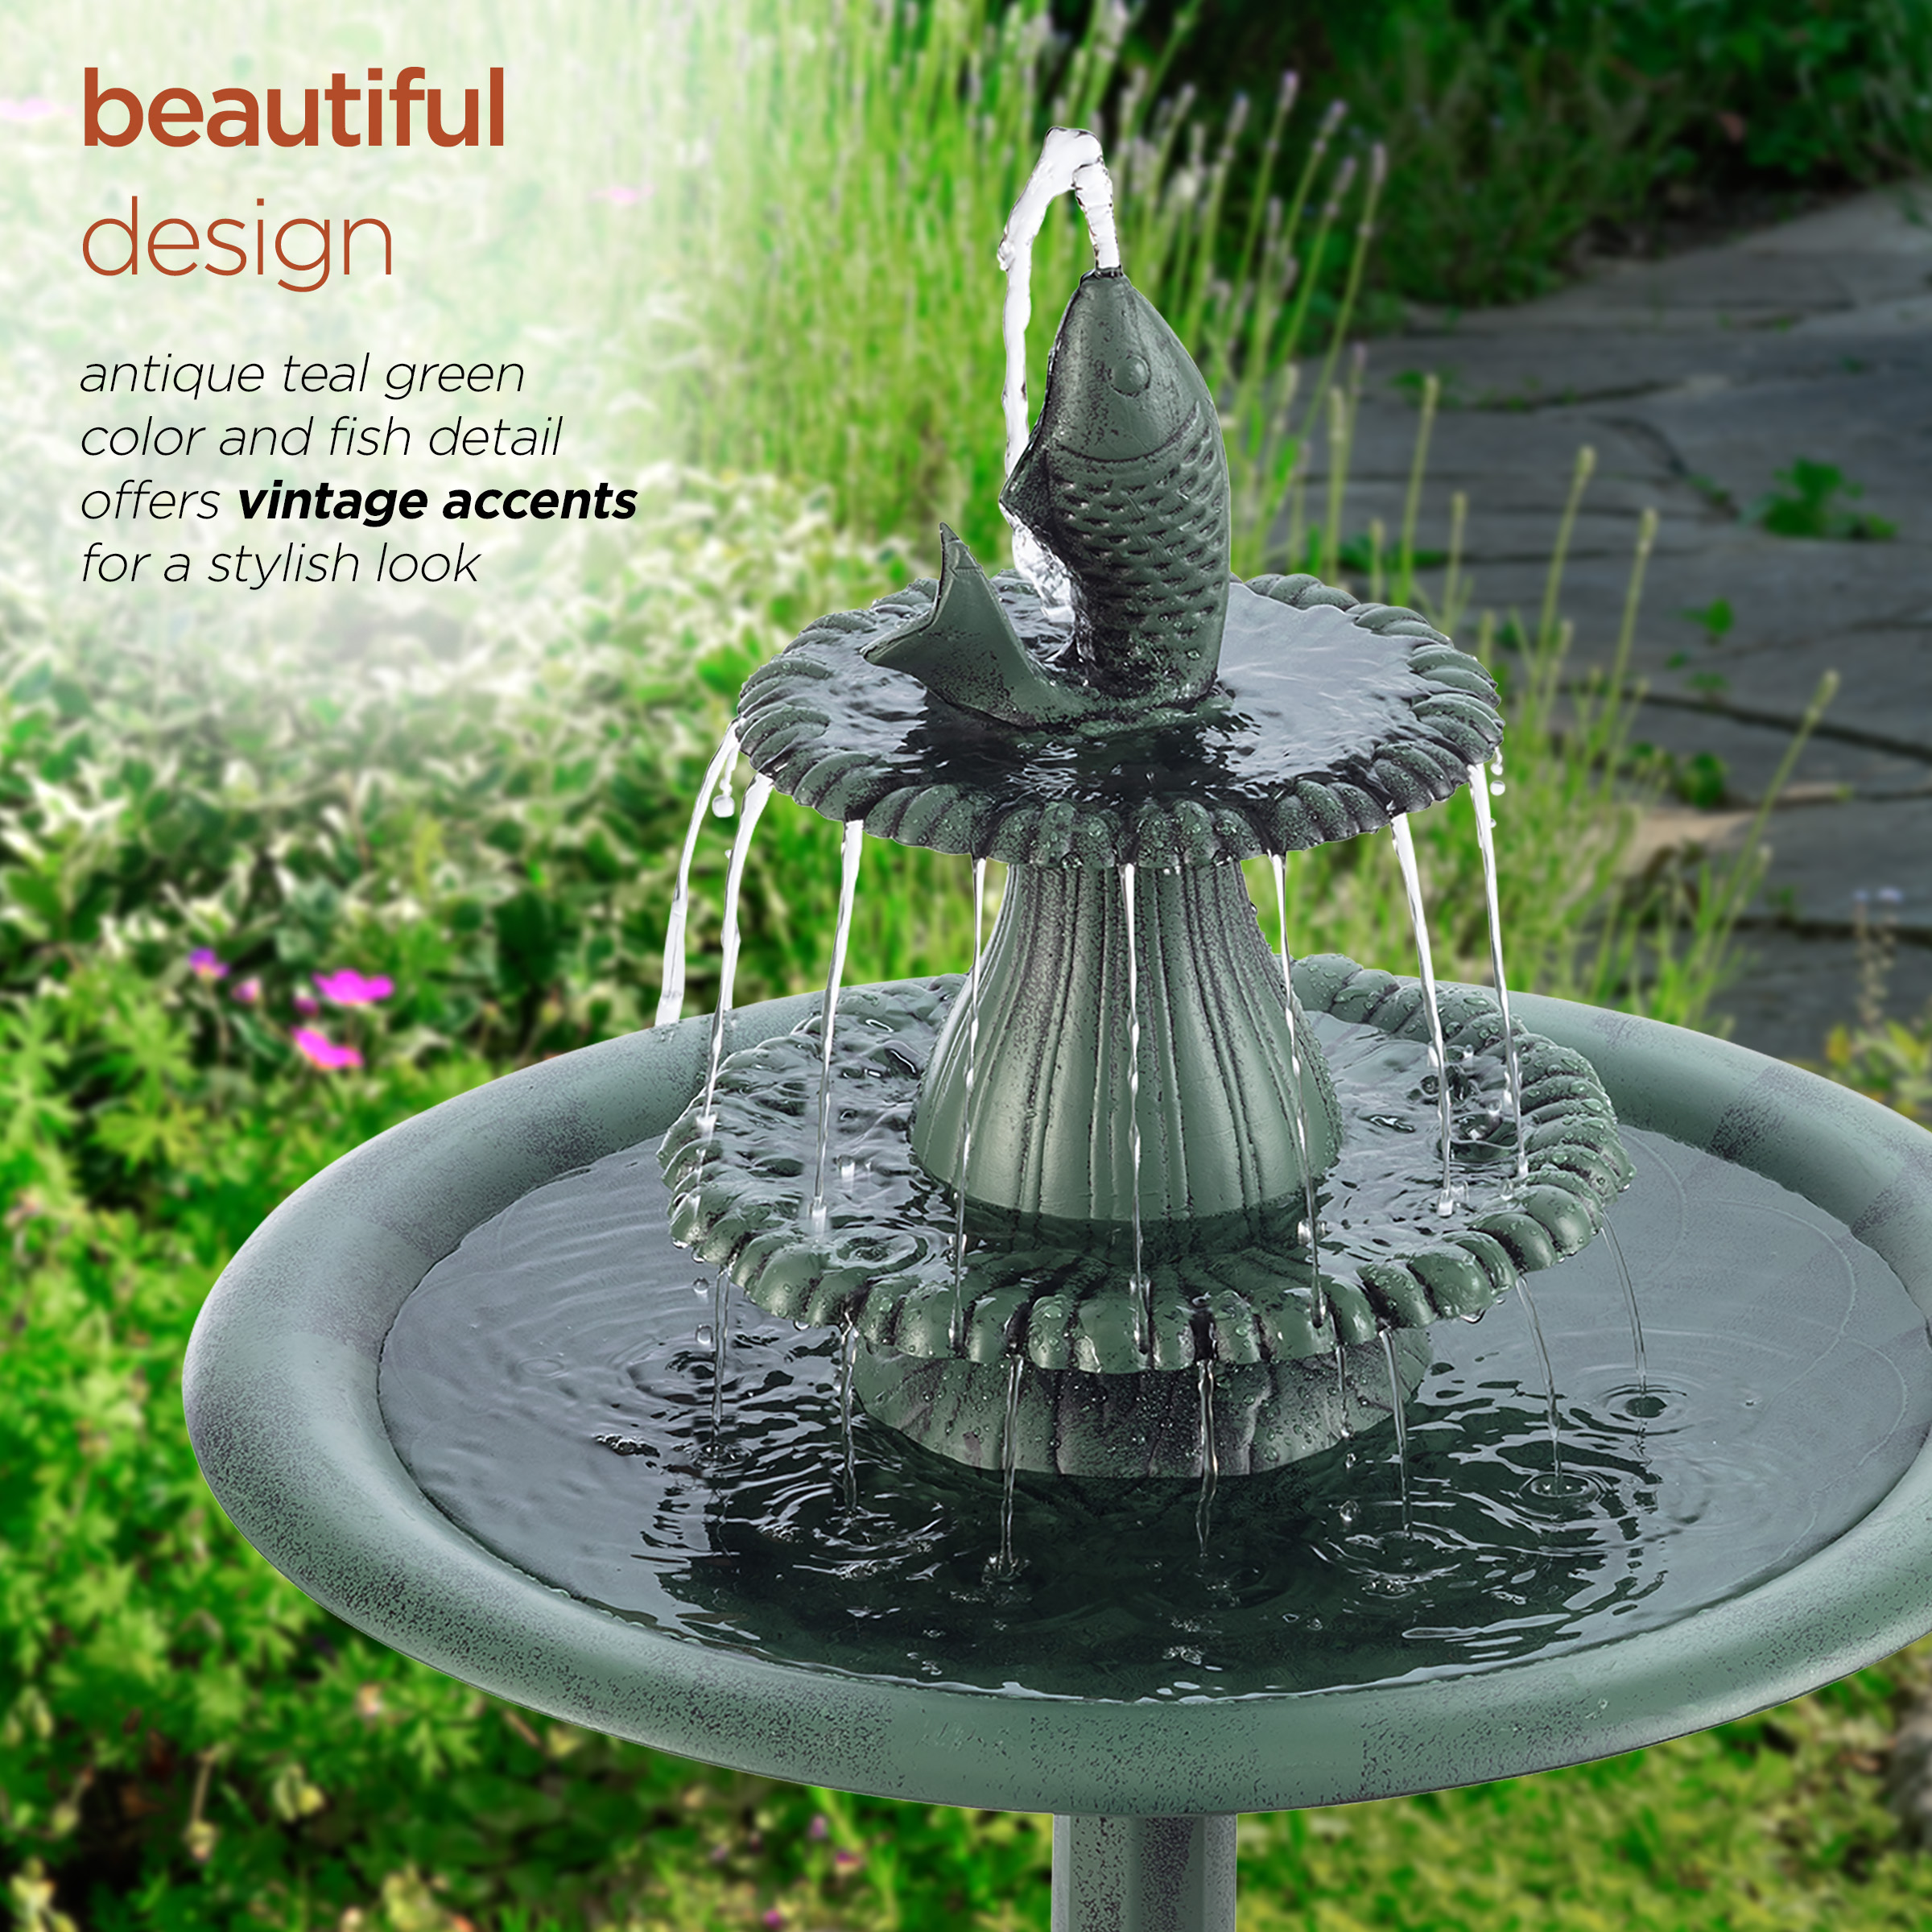 Alpine Corporation Plastic 3-Tier Pedestal Fountain Bird Bath, Green - image 5 of 12